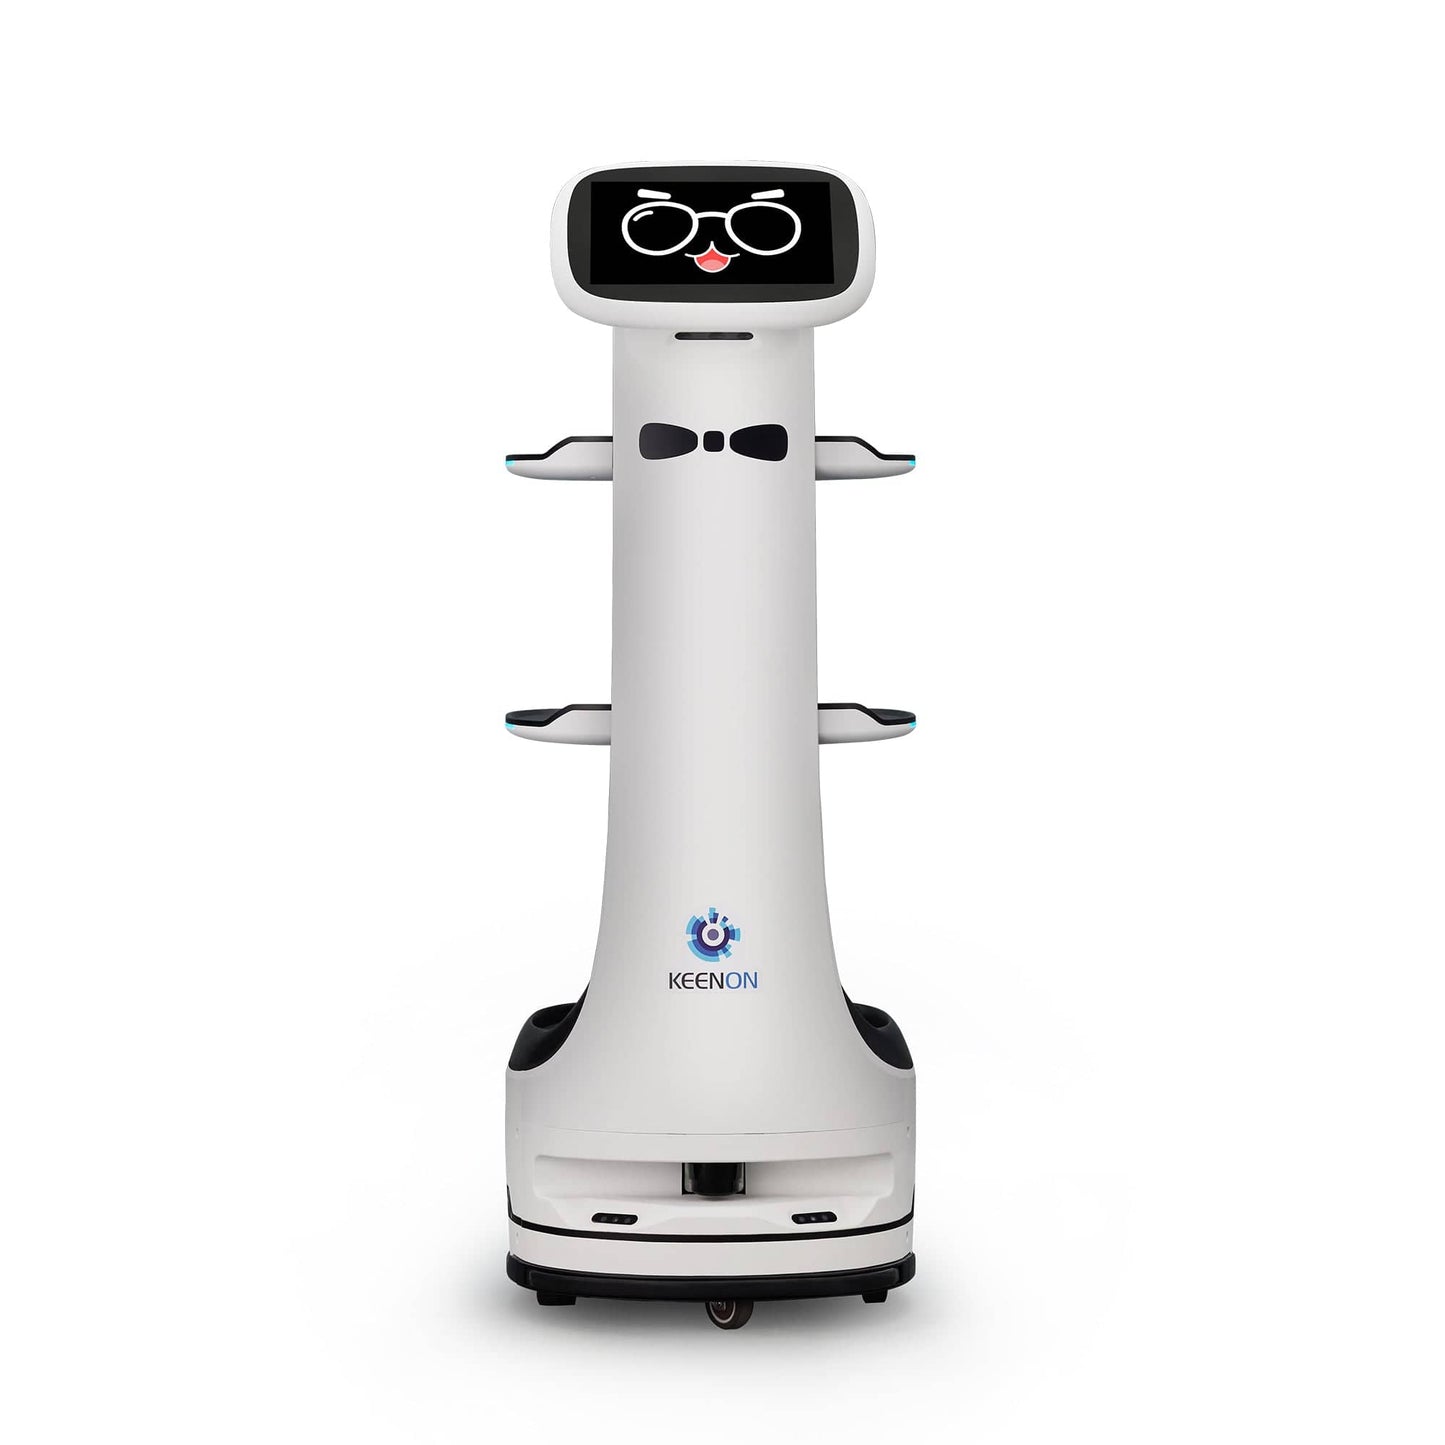 Keenon Robot Dinetbot T8 - Advanced Smart Robot